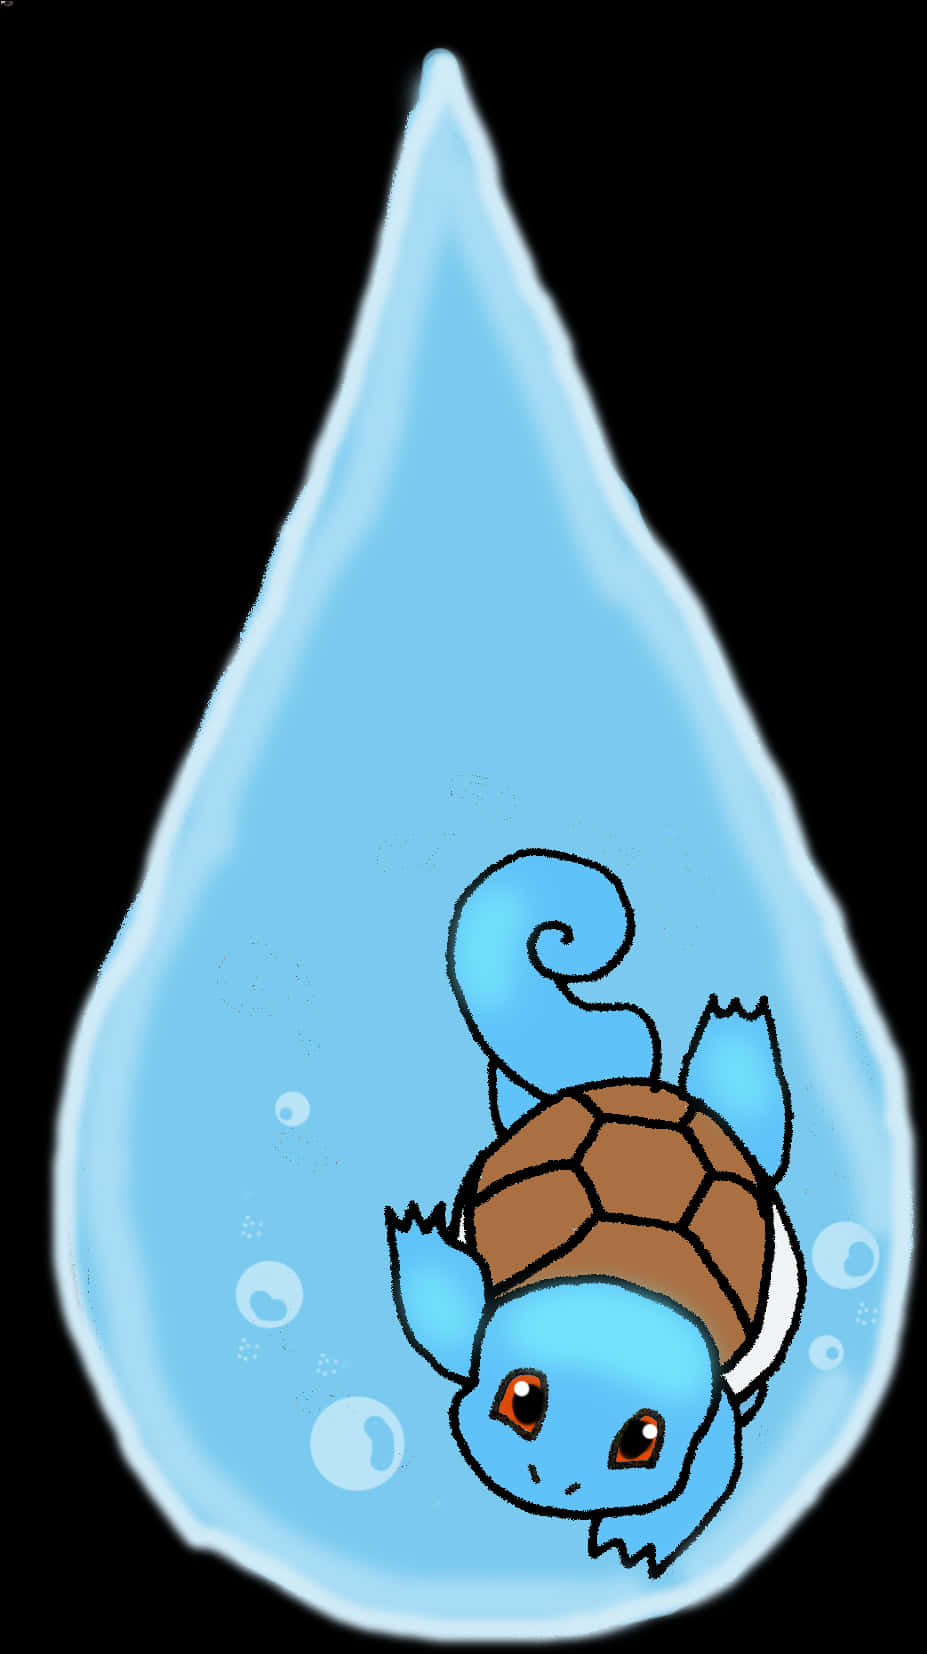 A Cartoon Turtle In A Drop Of Water